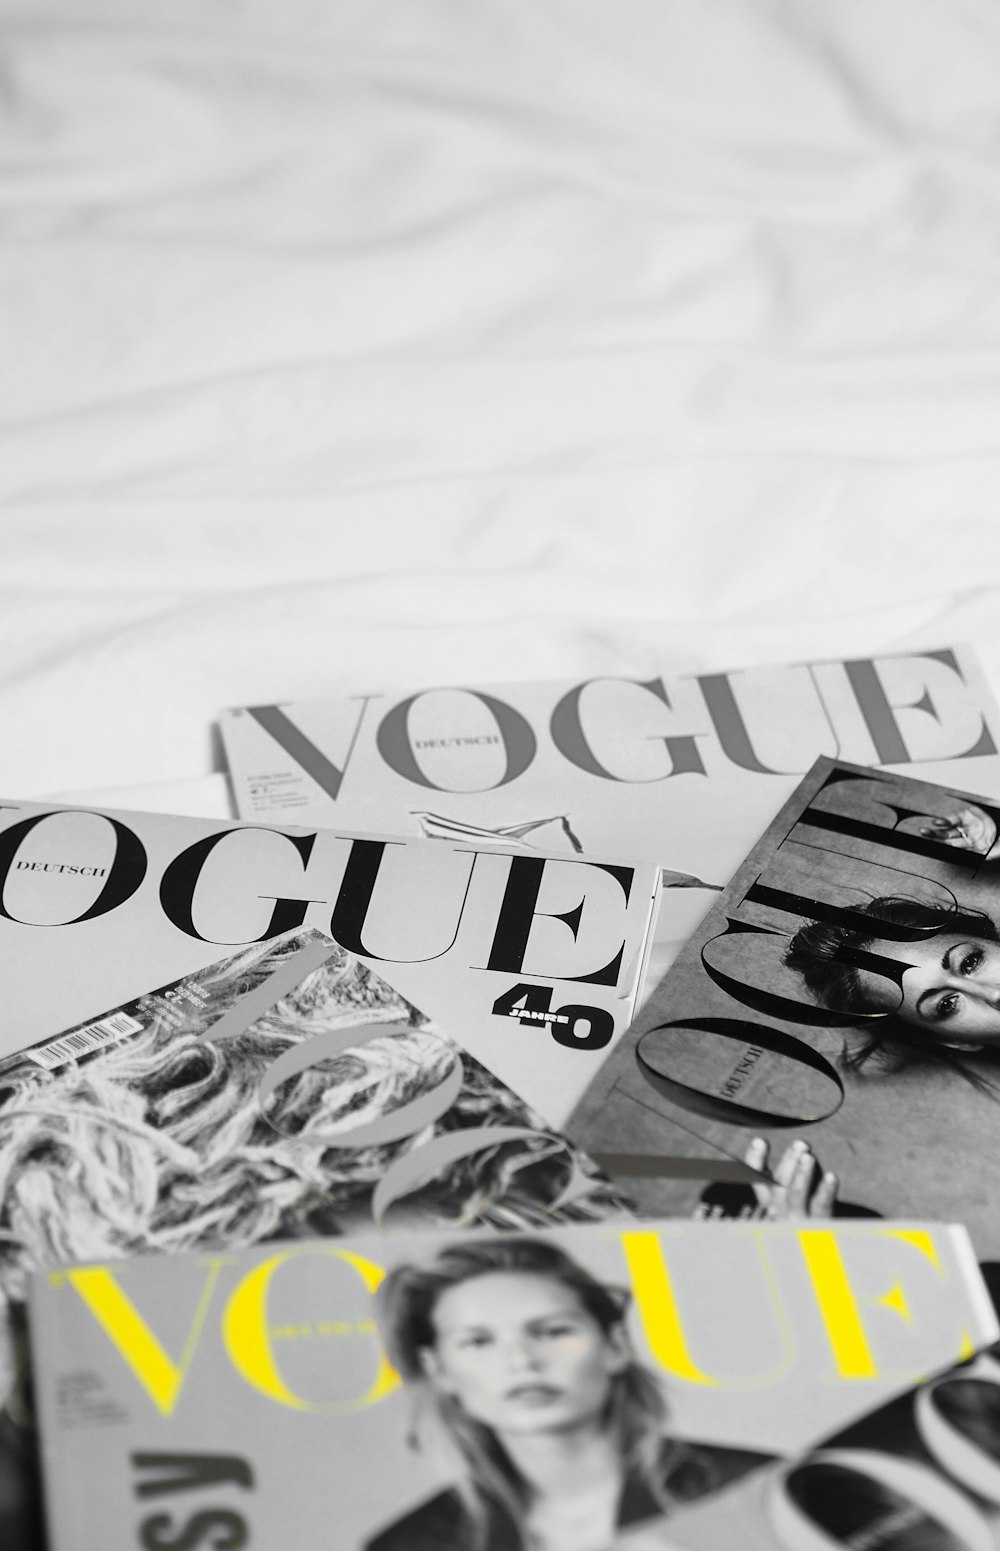 500 Vogue Pictures Download Free Images On Unsplash